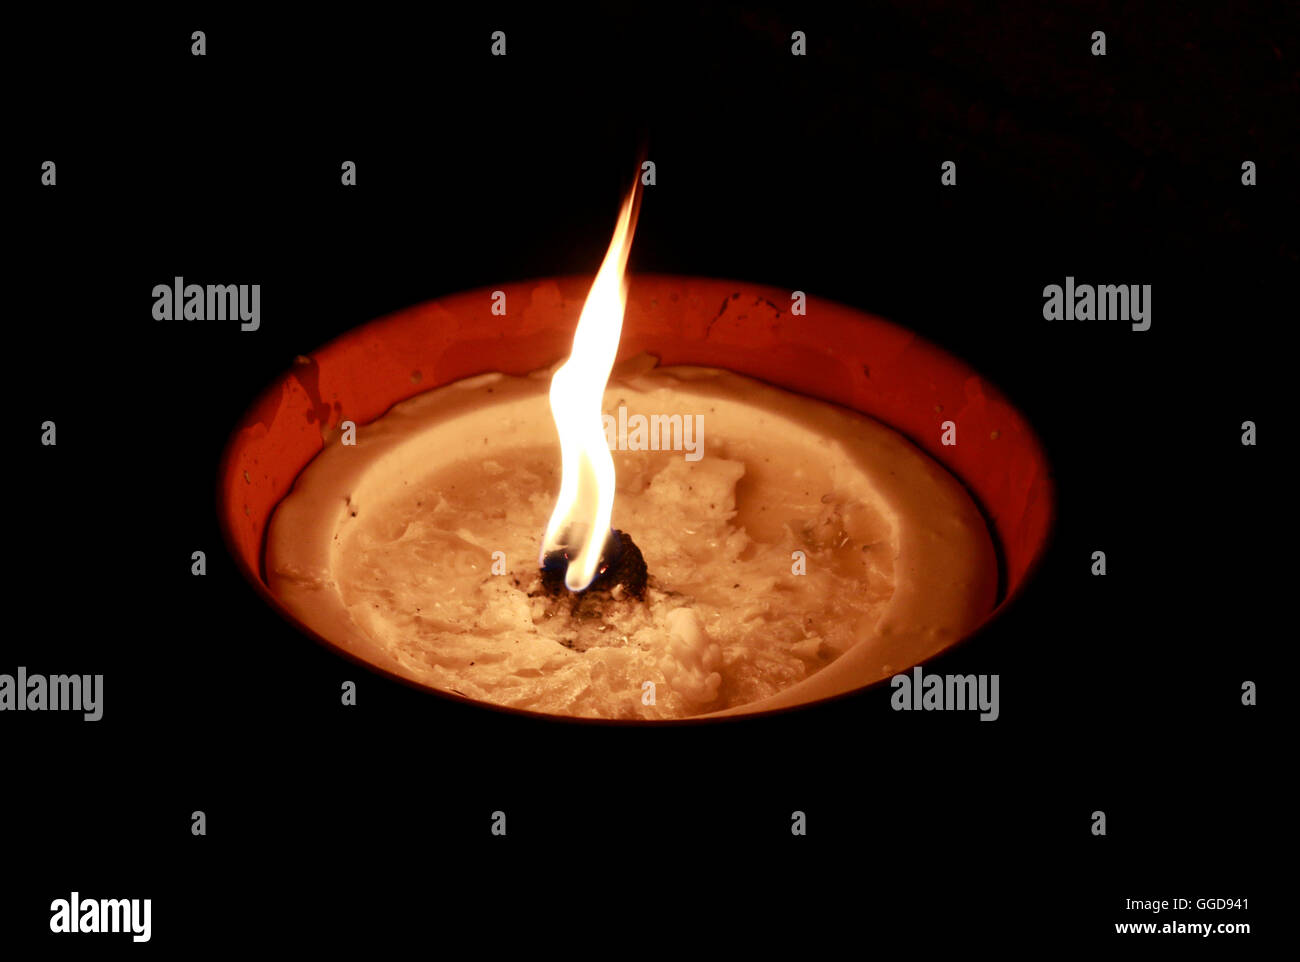 Feuer fuego oscuridad nocturna luz de velas atmósfera duelo simbólico feuerschale gedenken mounring símbolo Foto de stock